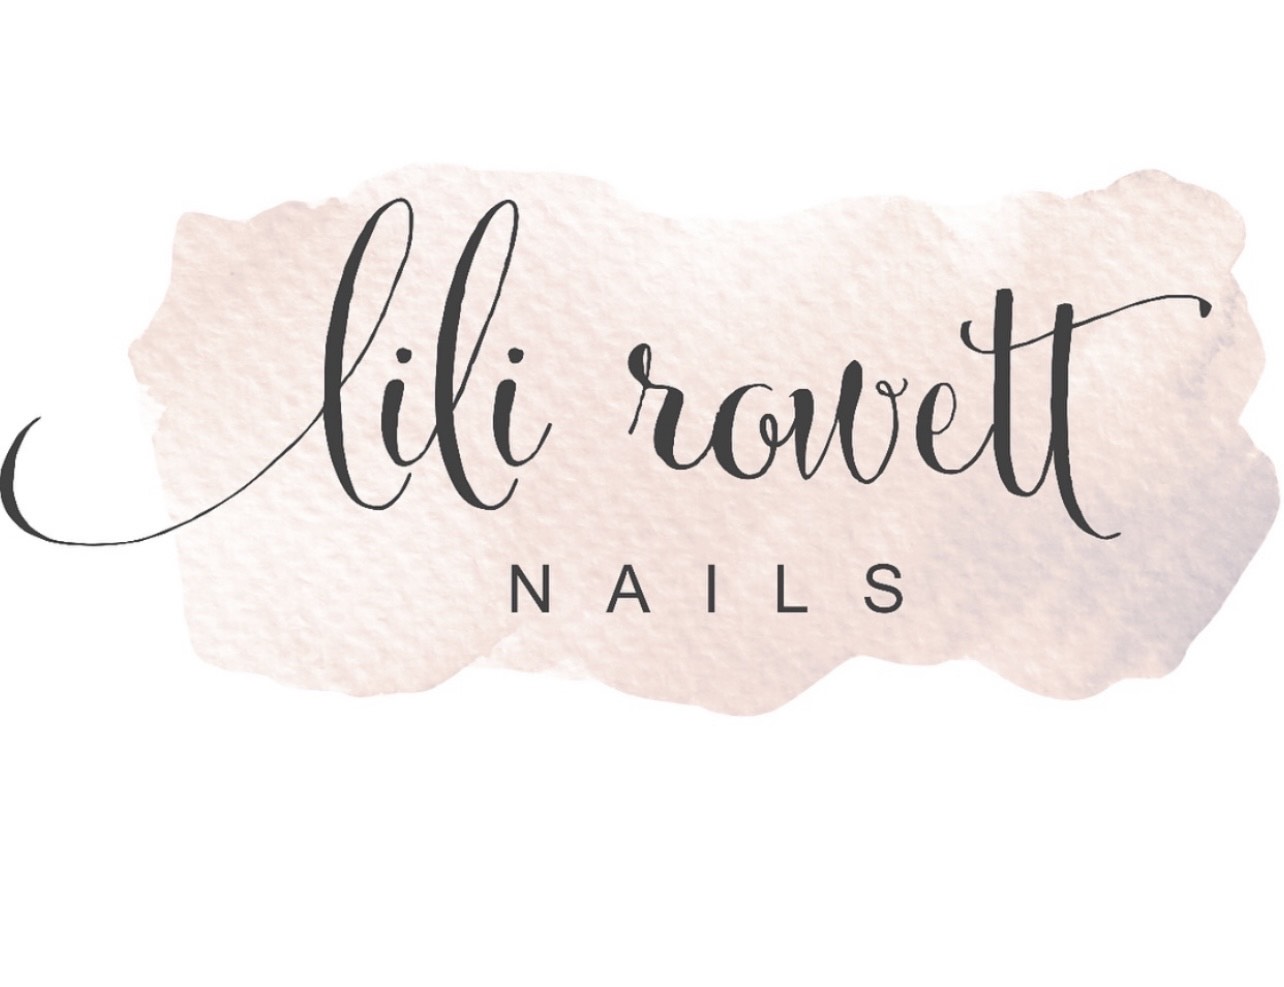 Lili Rowett Nails logo